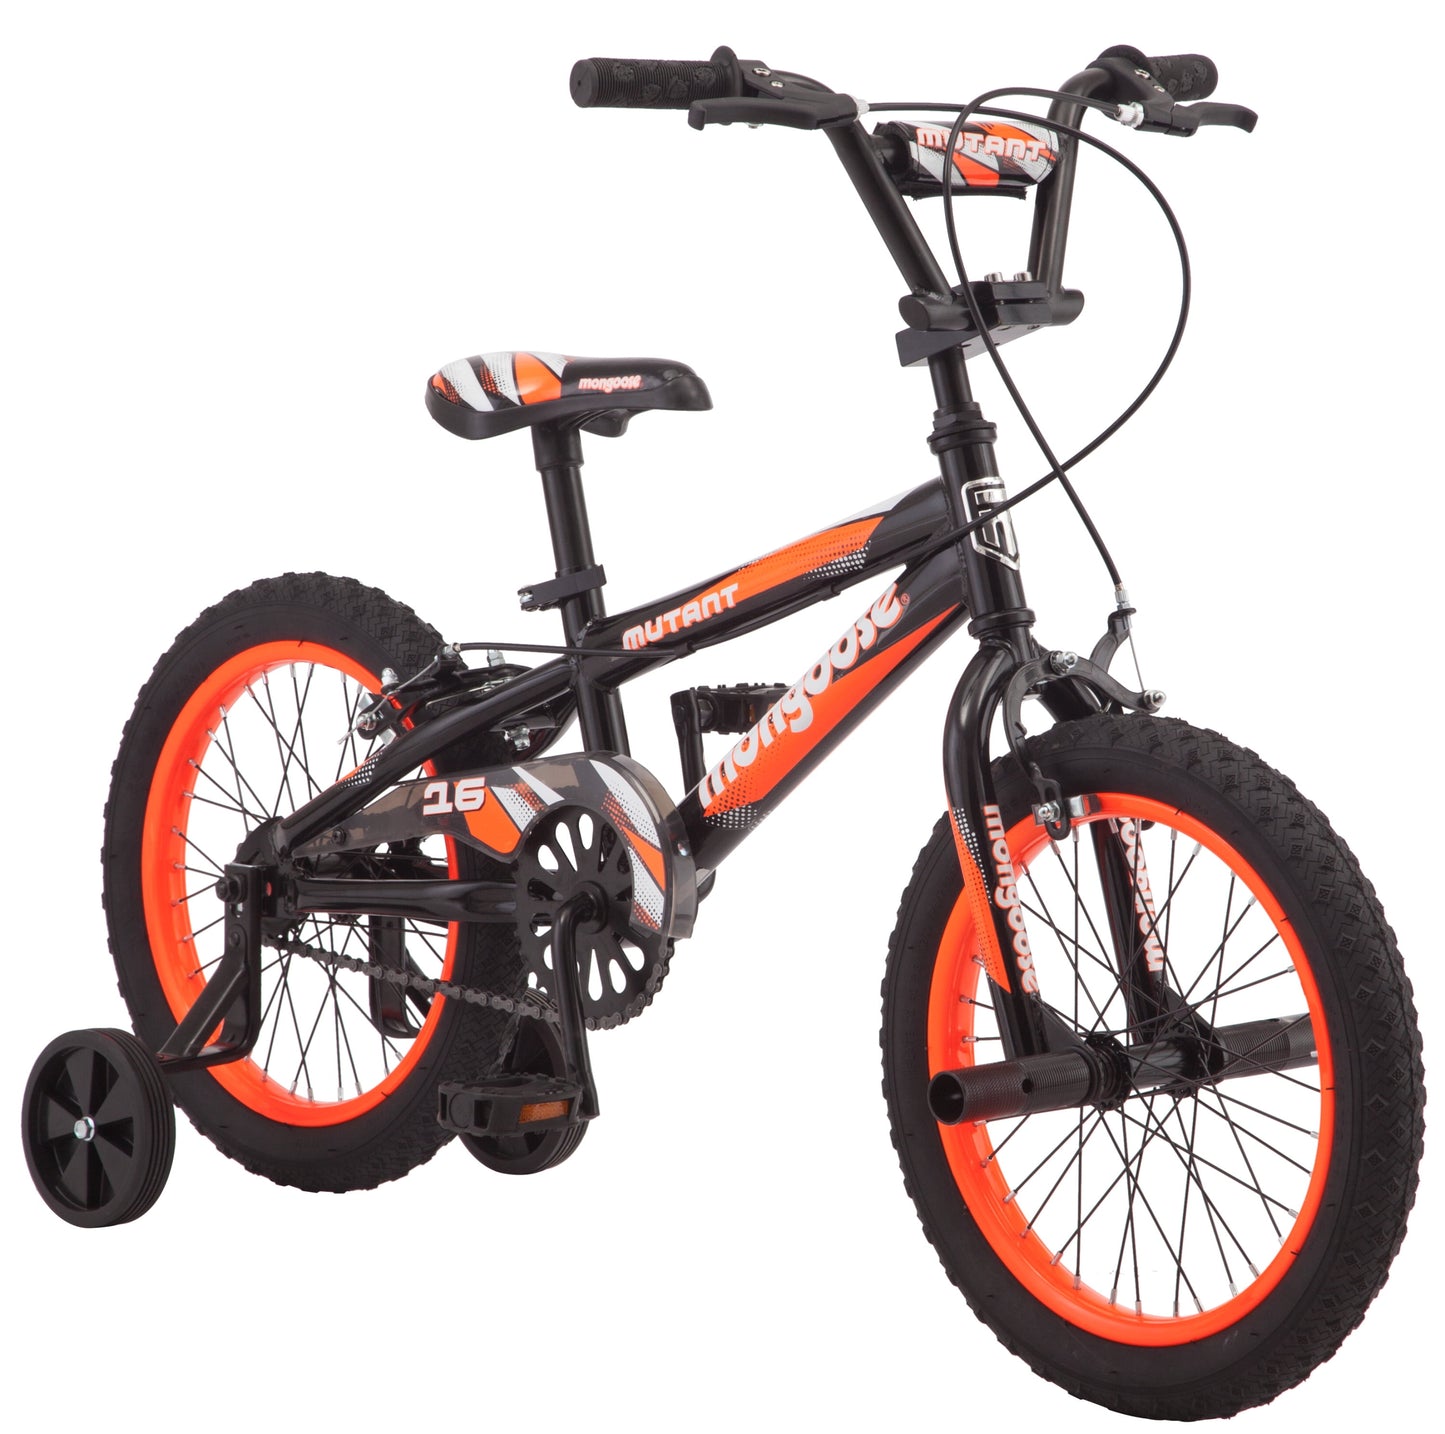 Mongoose 16" Mutant Kid's BMX Bike, Ages 3-5, Black & Orange